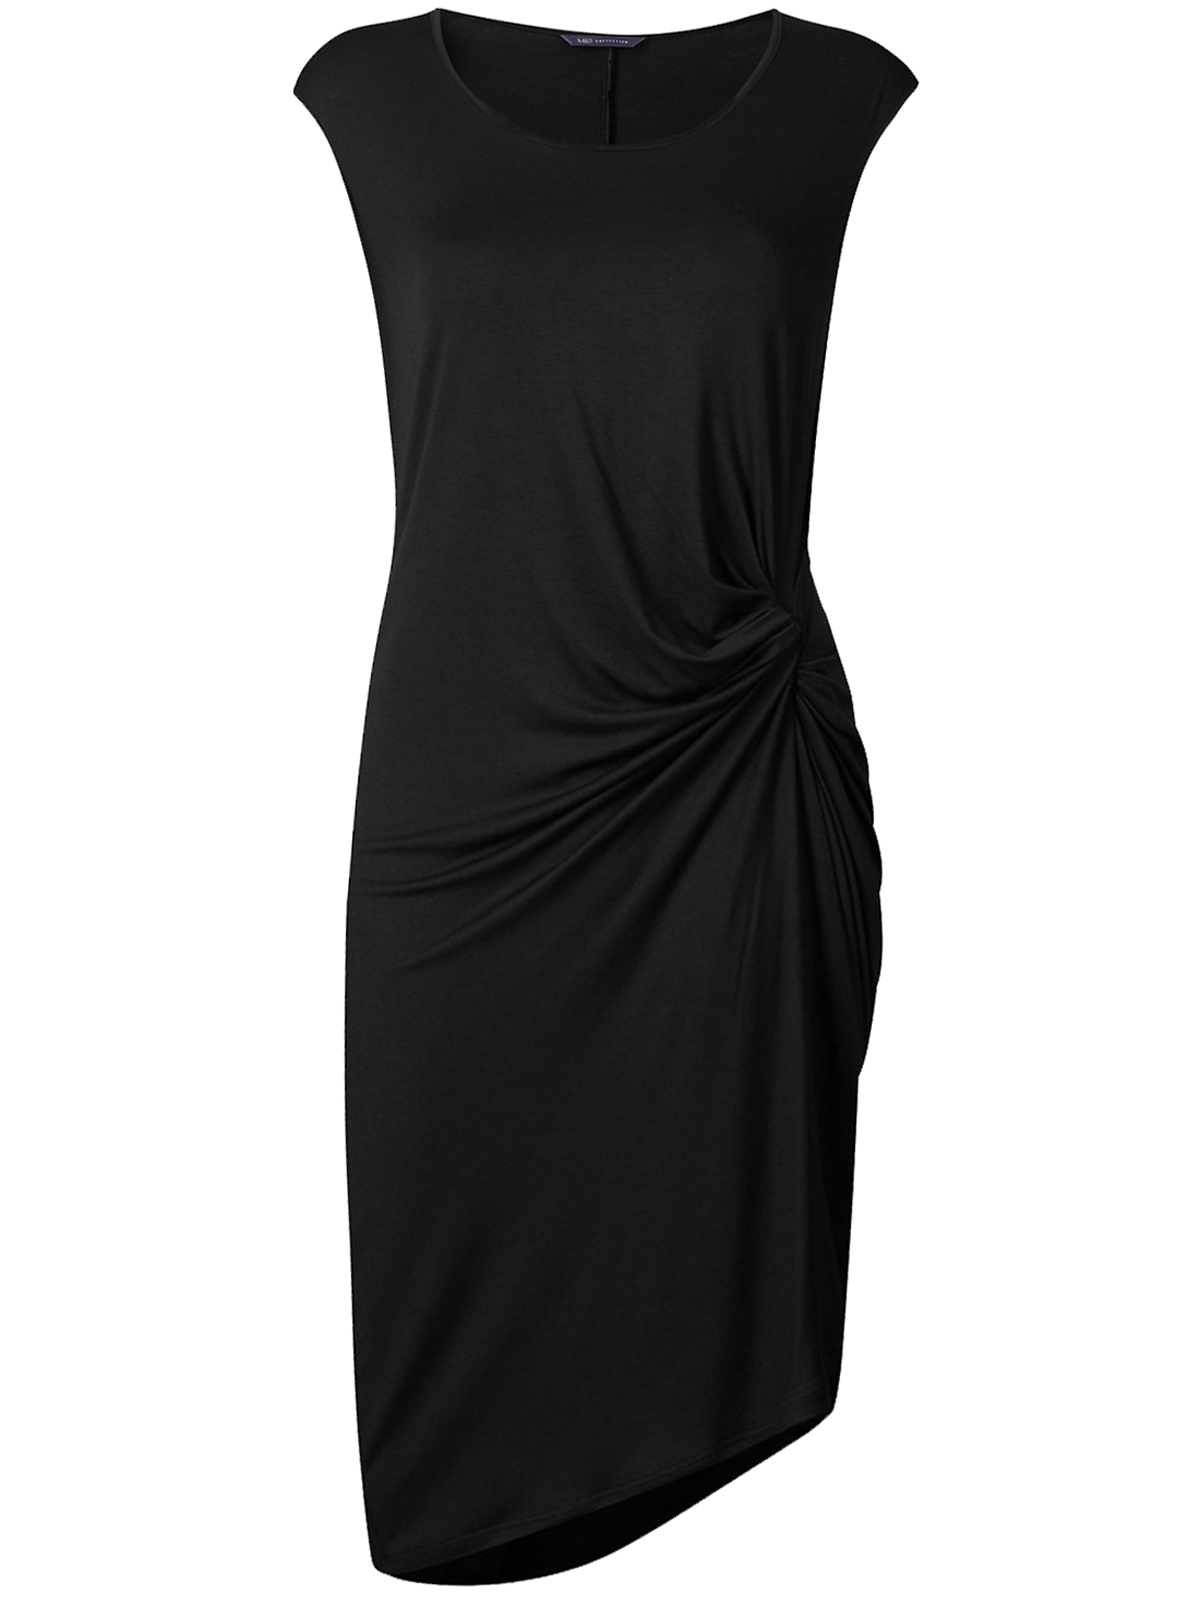 Marks and Spencer - - M&5 BLACK Side Knot Jersey Vest Dress - Size 12 to 18